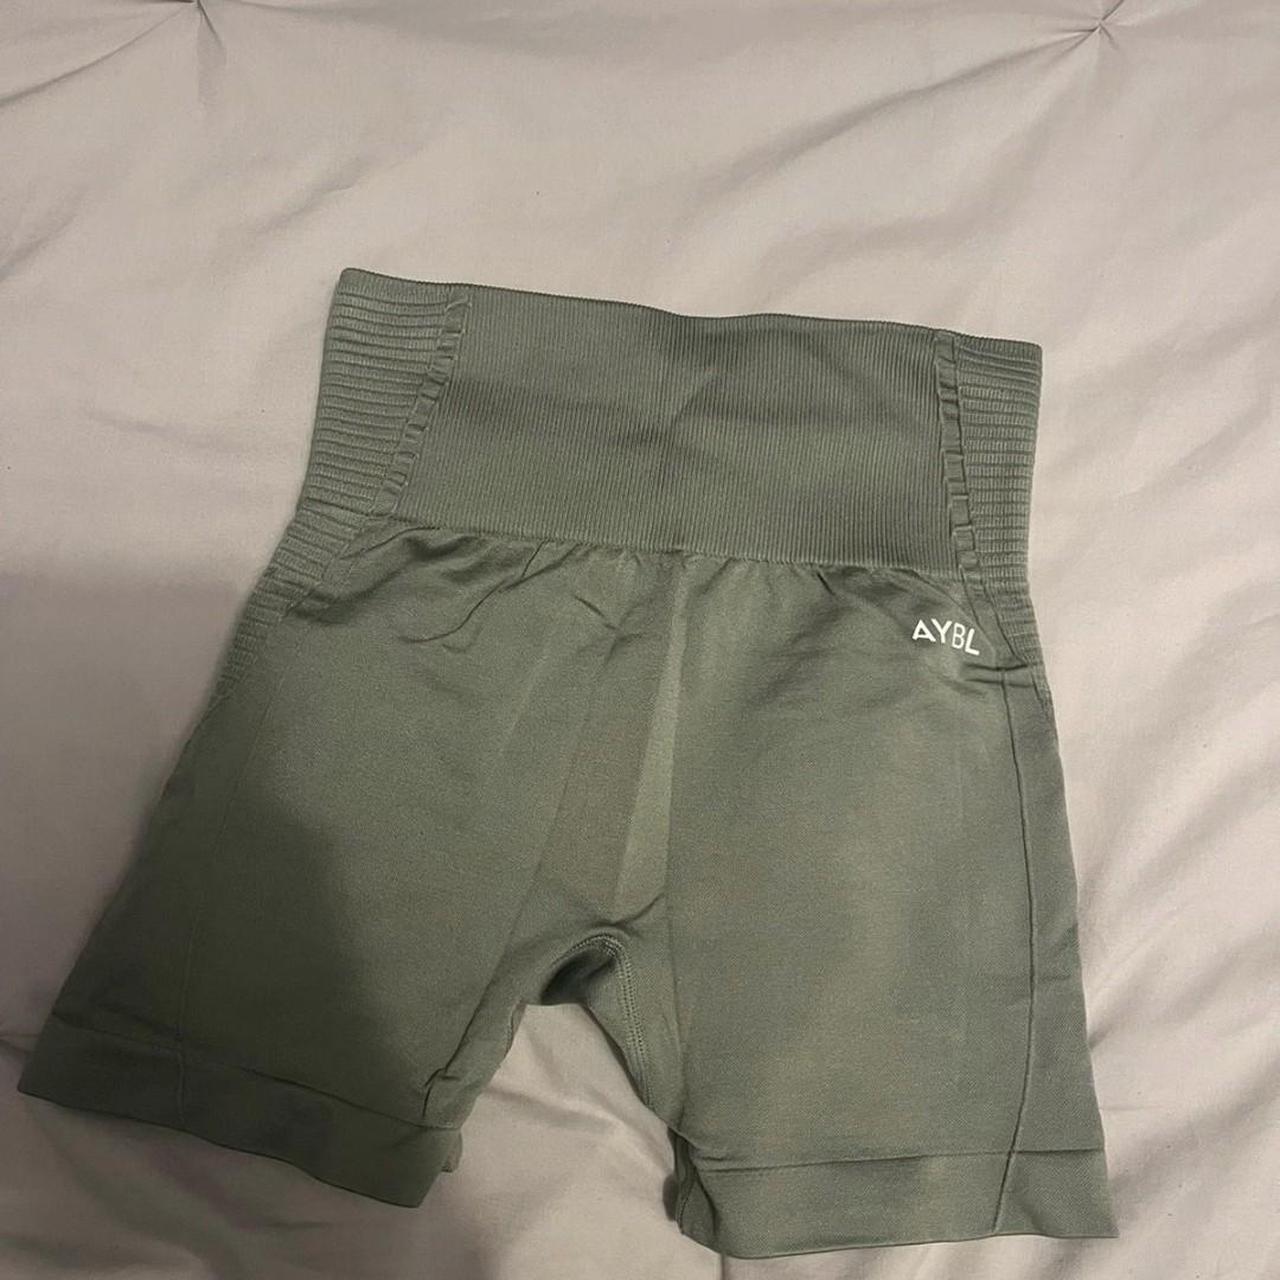 AYBL, Shorts, Olive Green Balance V2 Aybl Shorts